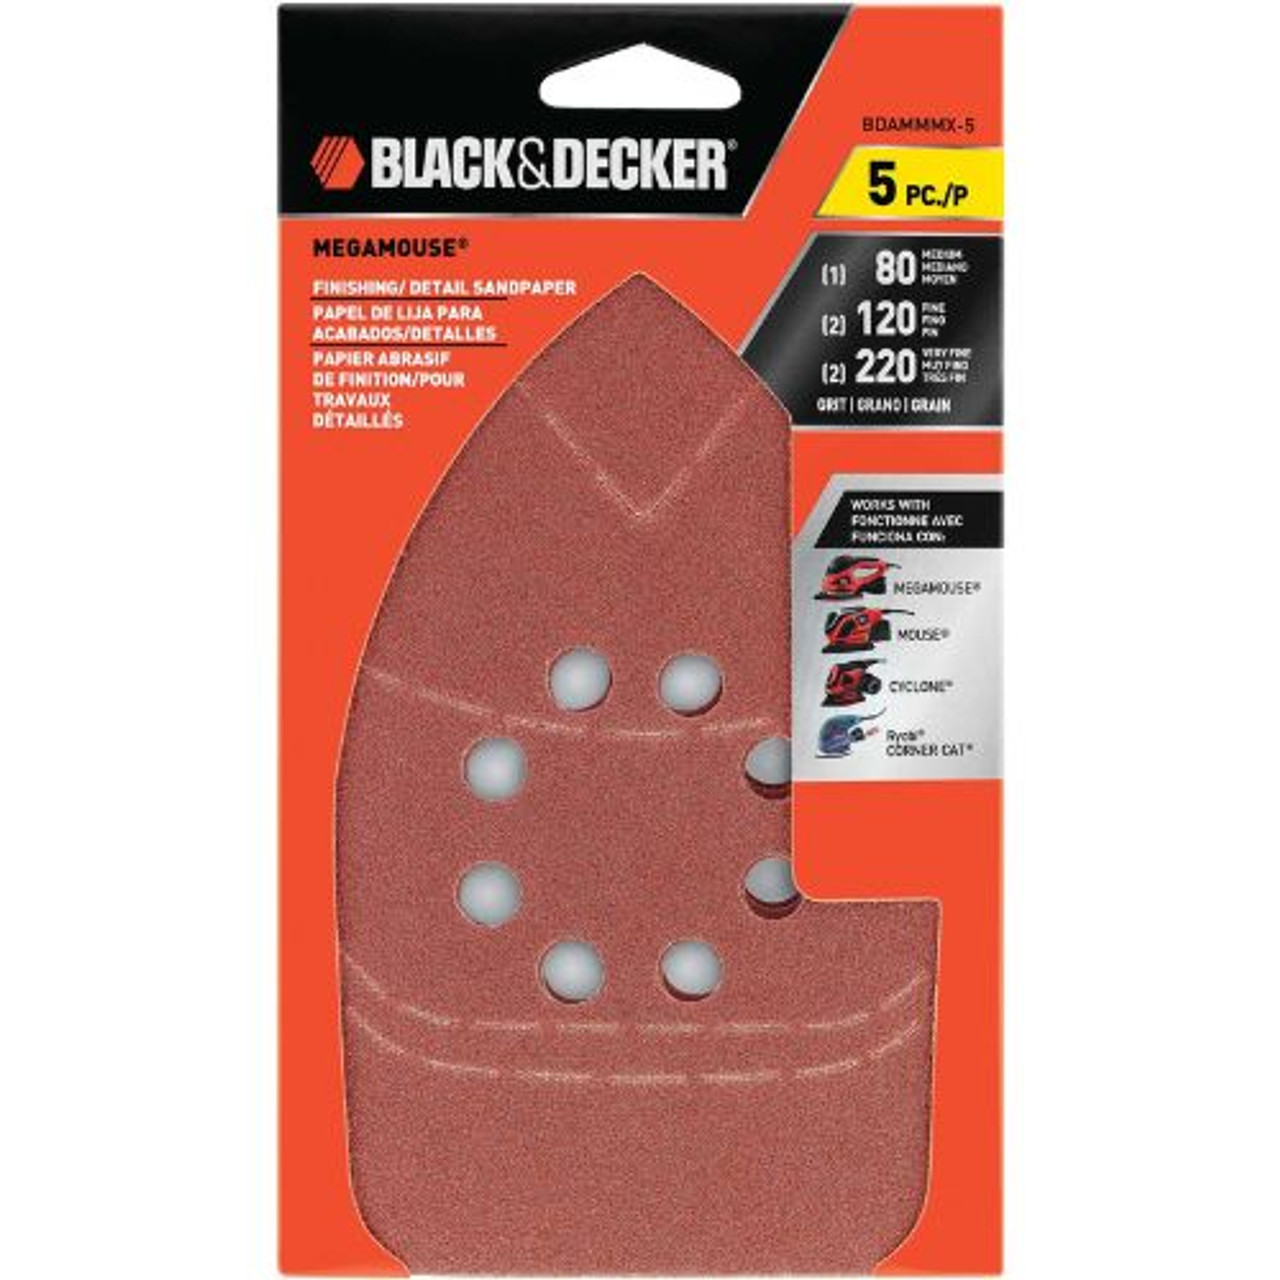 Black & Decker BDAM220 Mouse Sandpaper